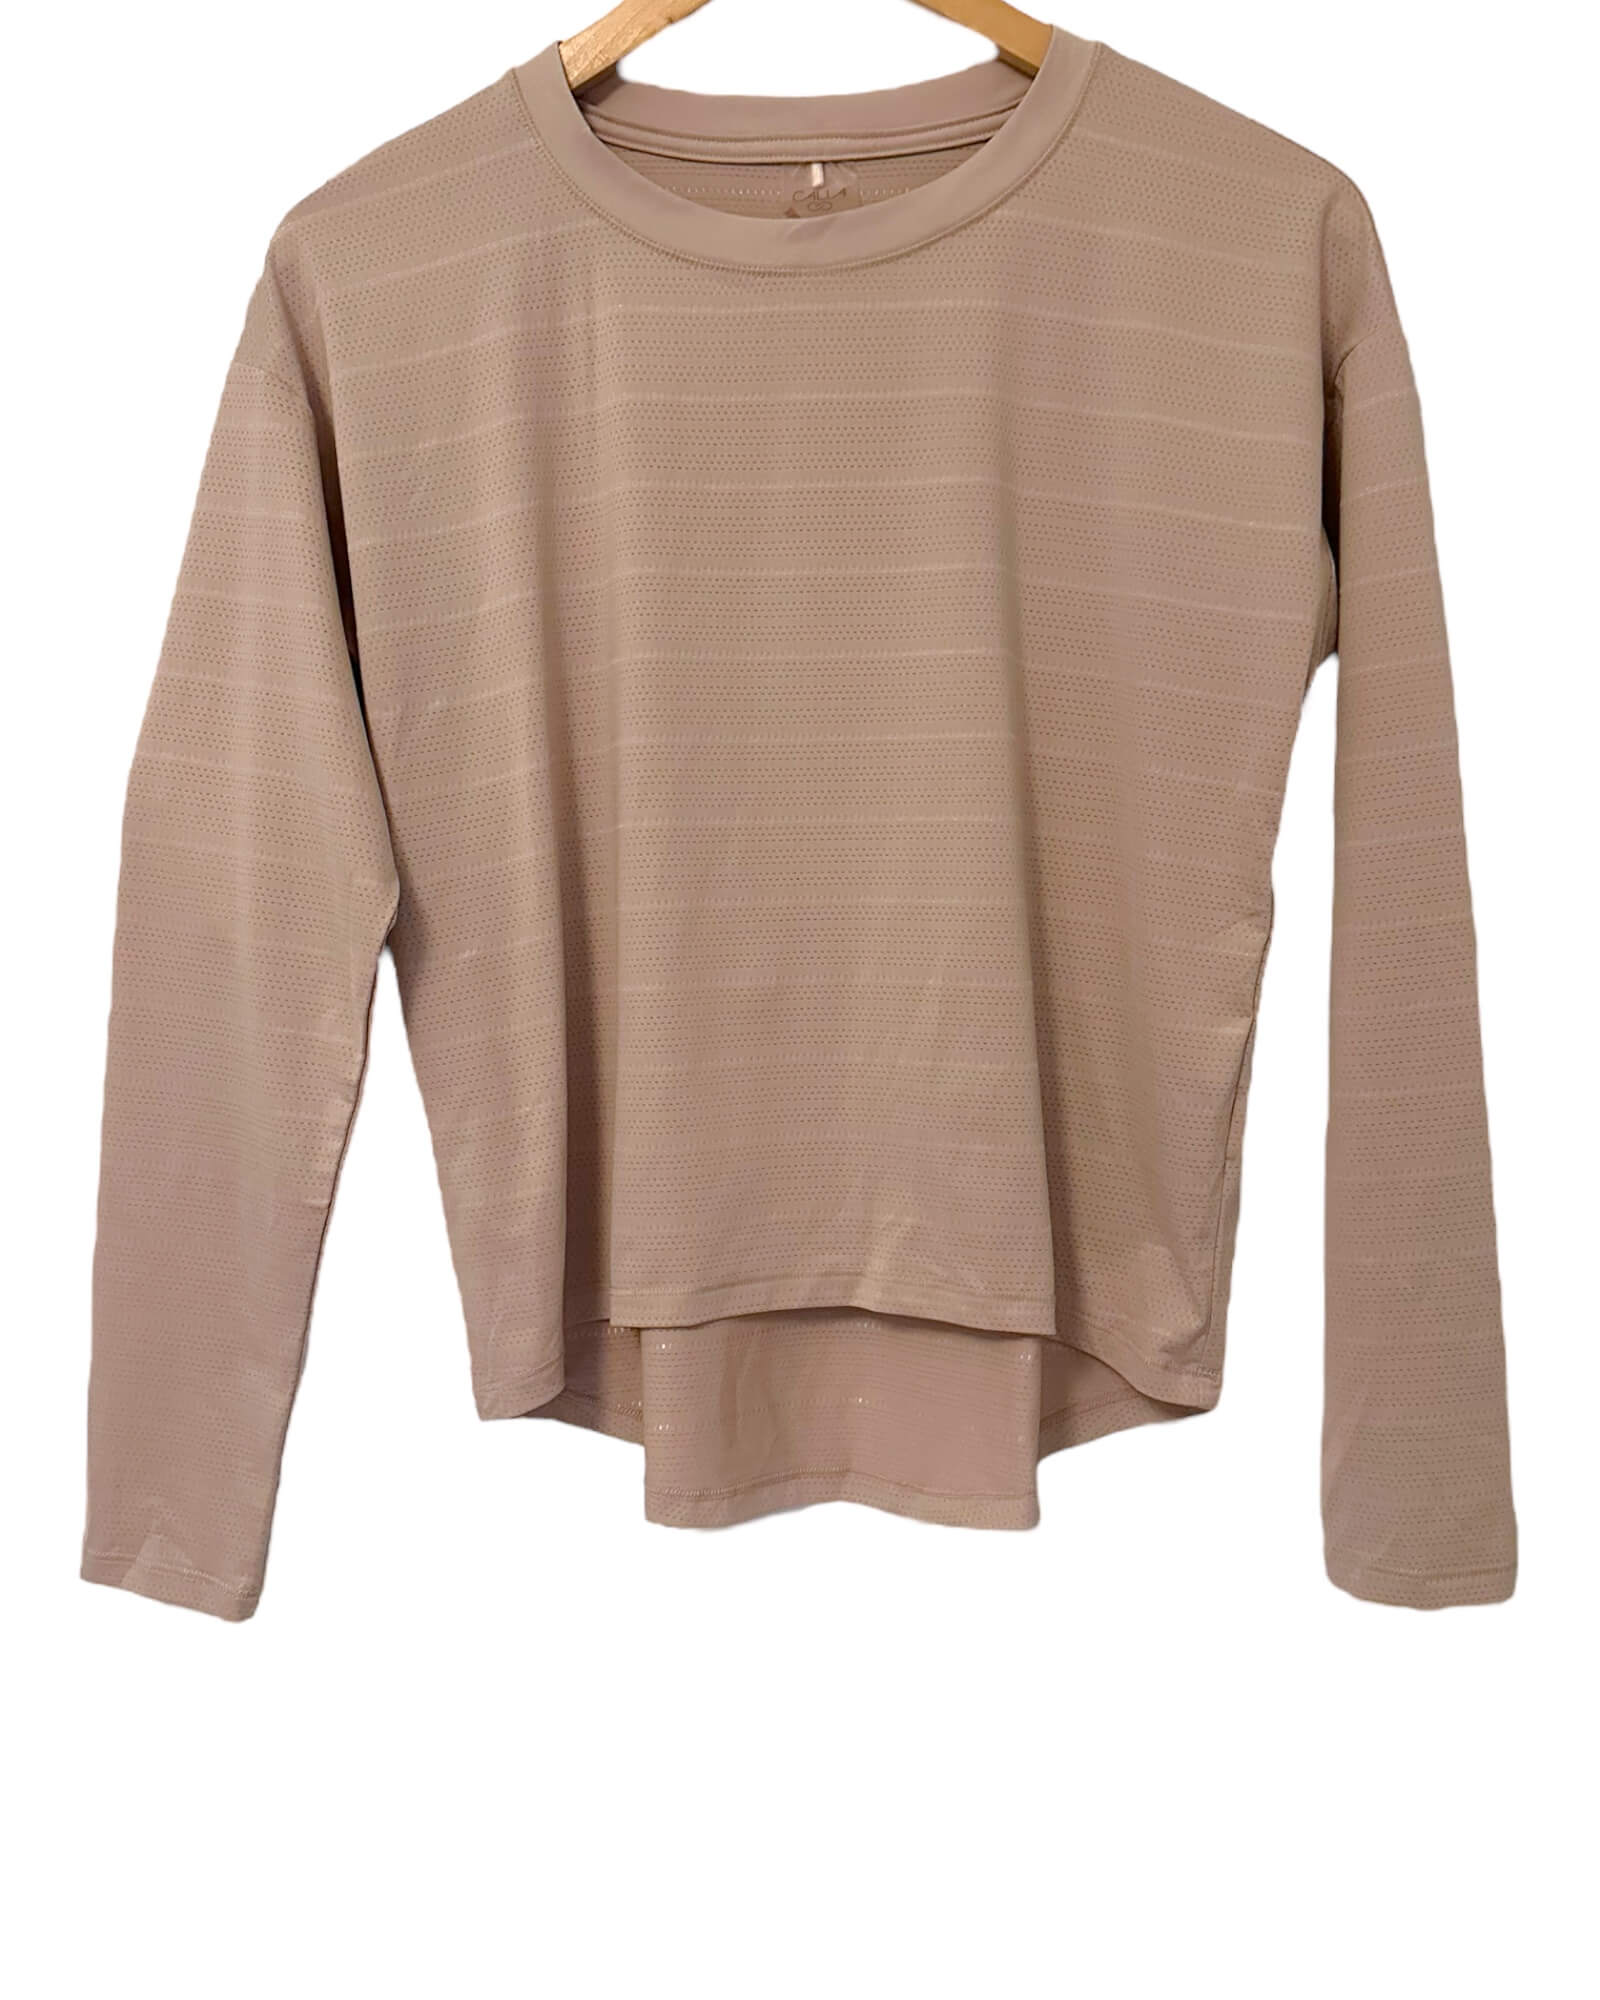 Soft Autumn CALIA sandstone tan long sleeve fitness shirt